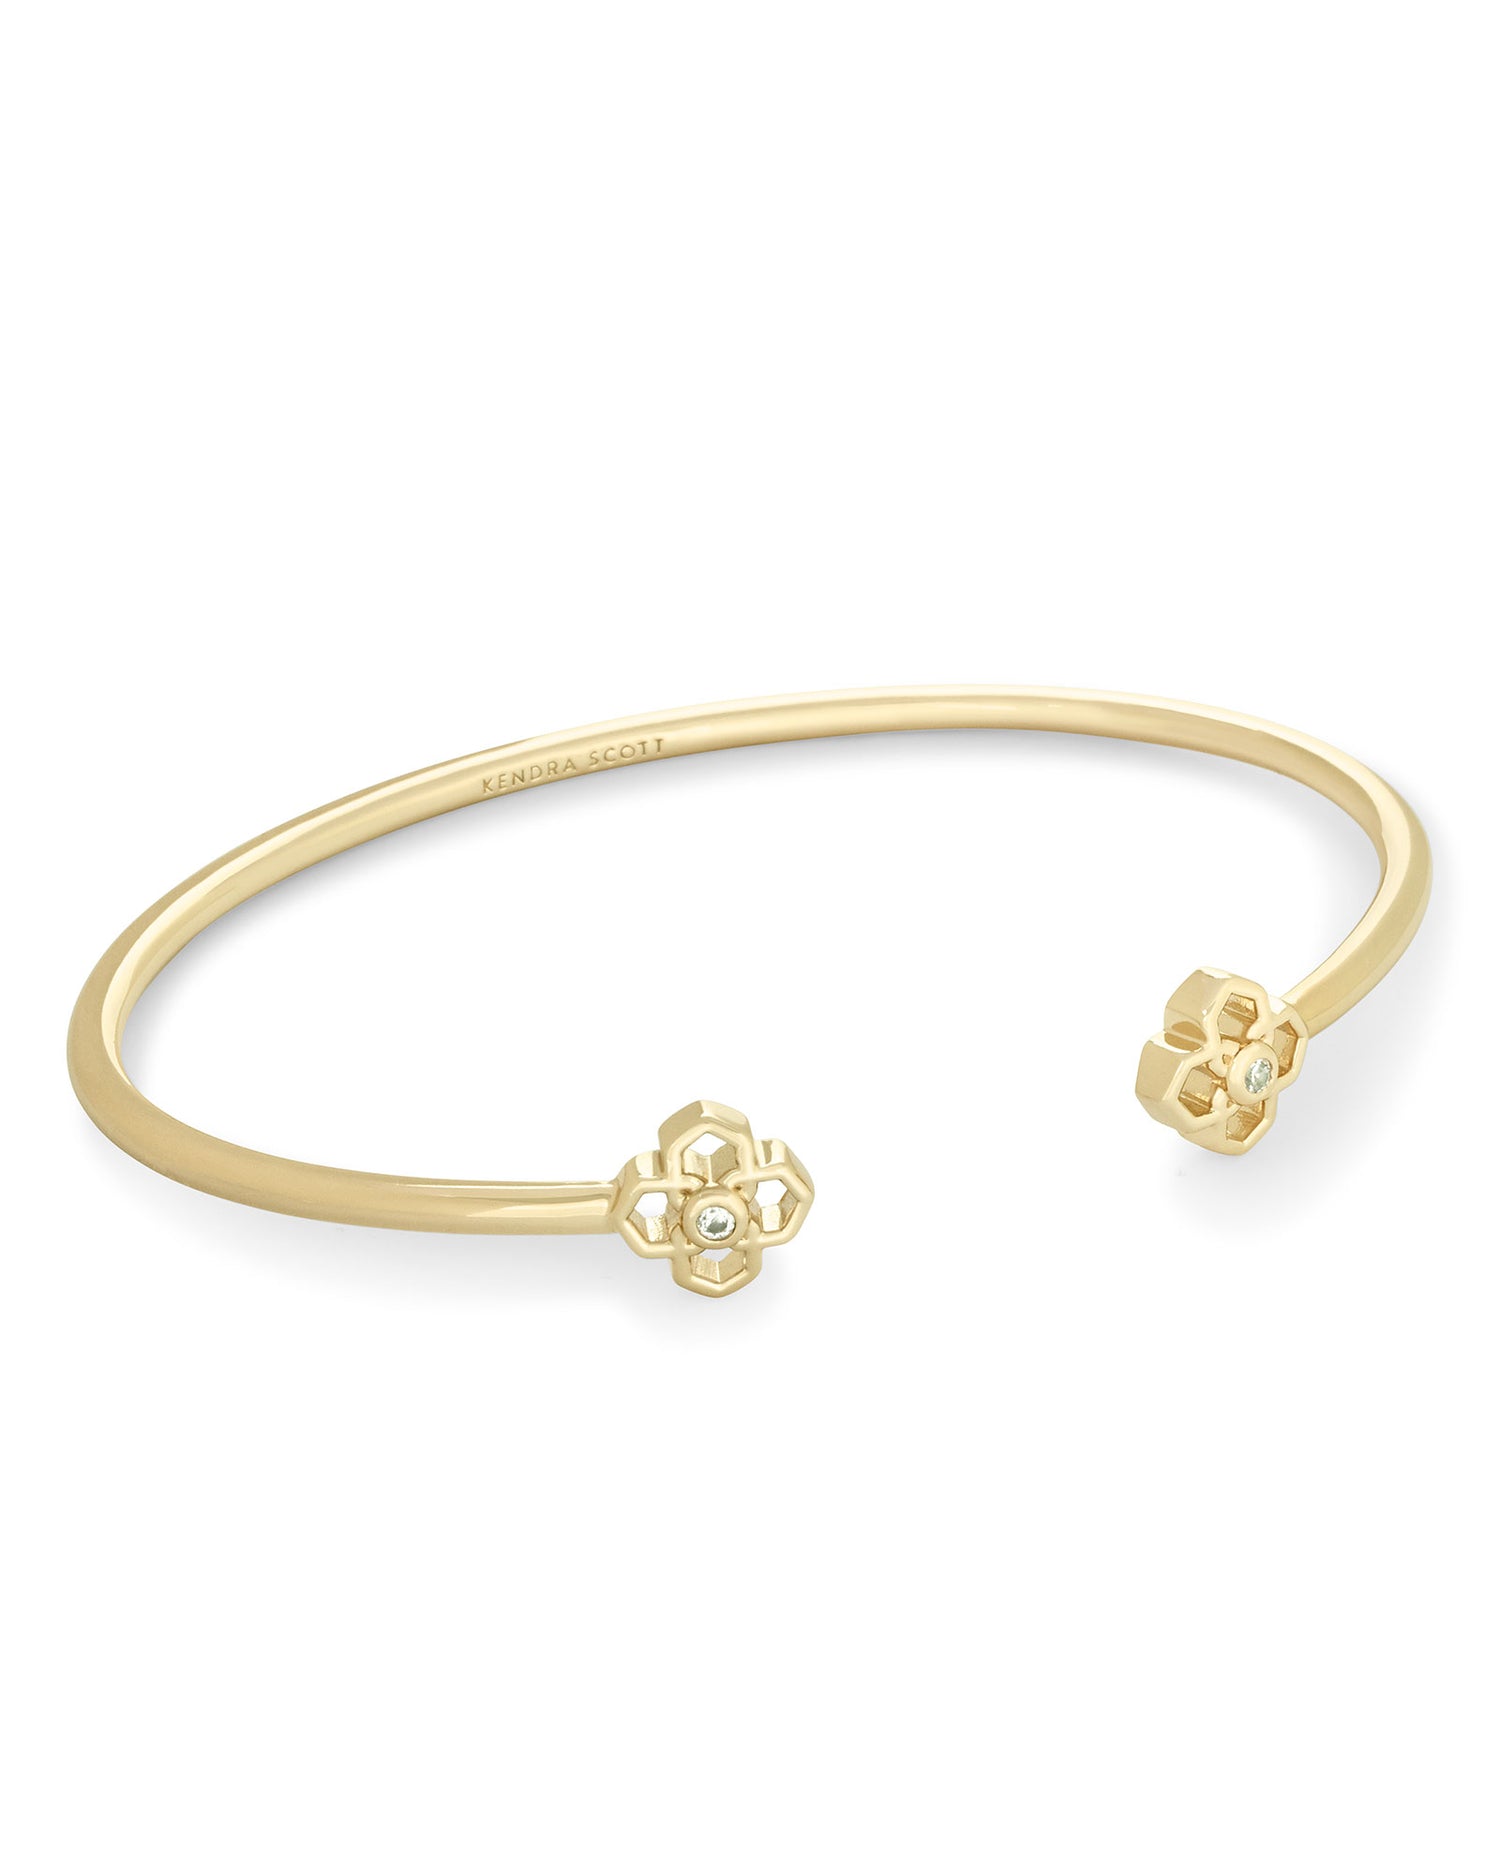 Ella Gold Cuff Bracelet in White Crystal | Kendra Scott